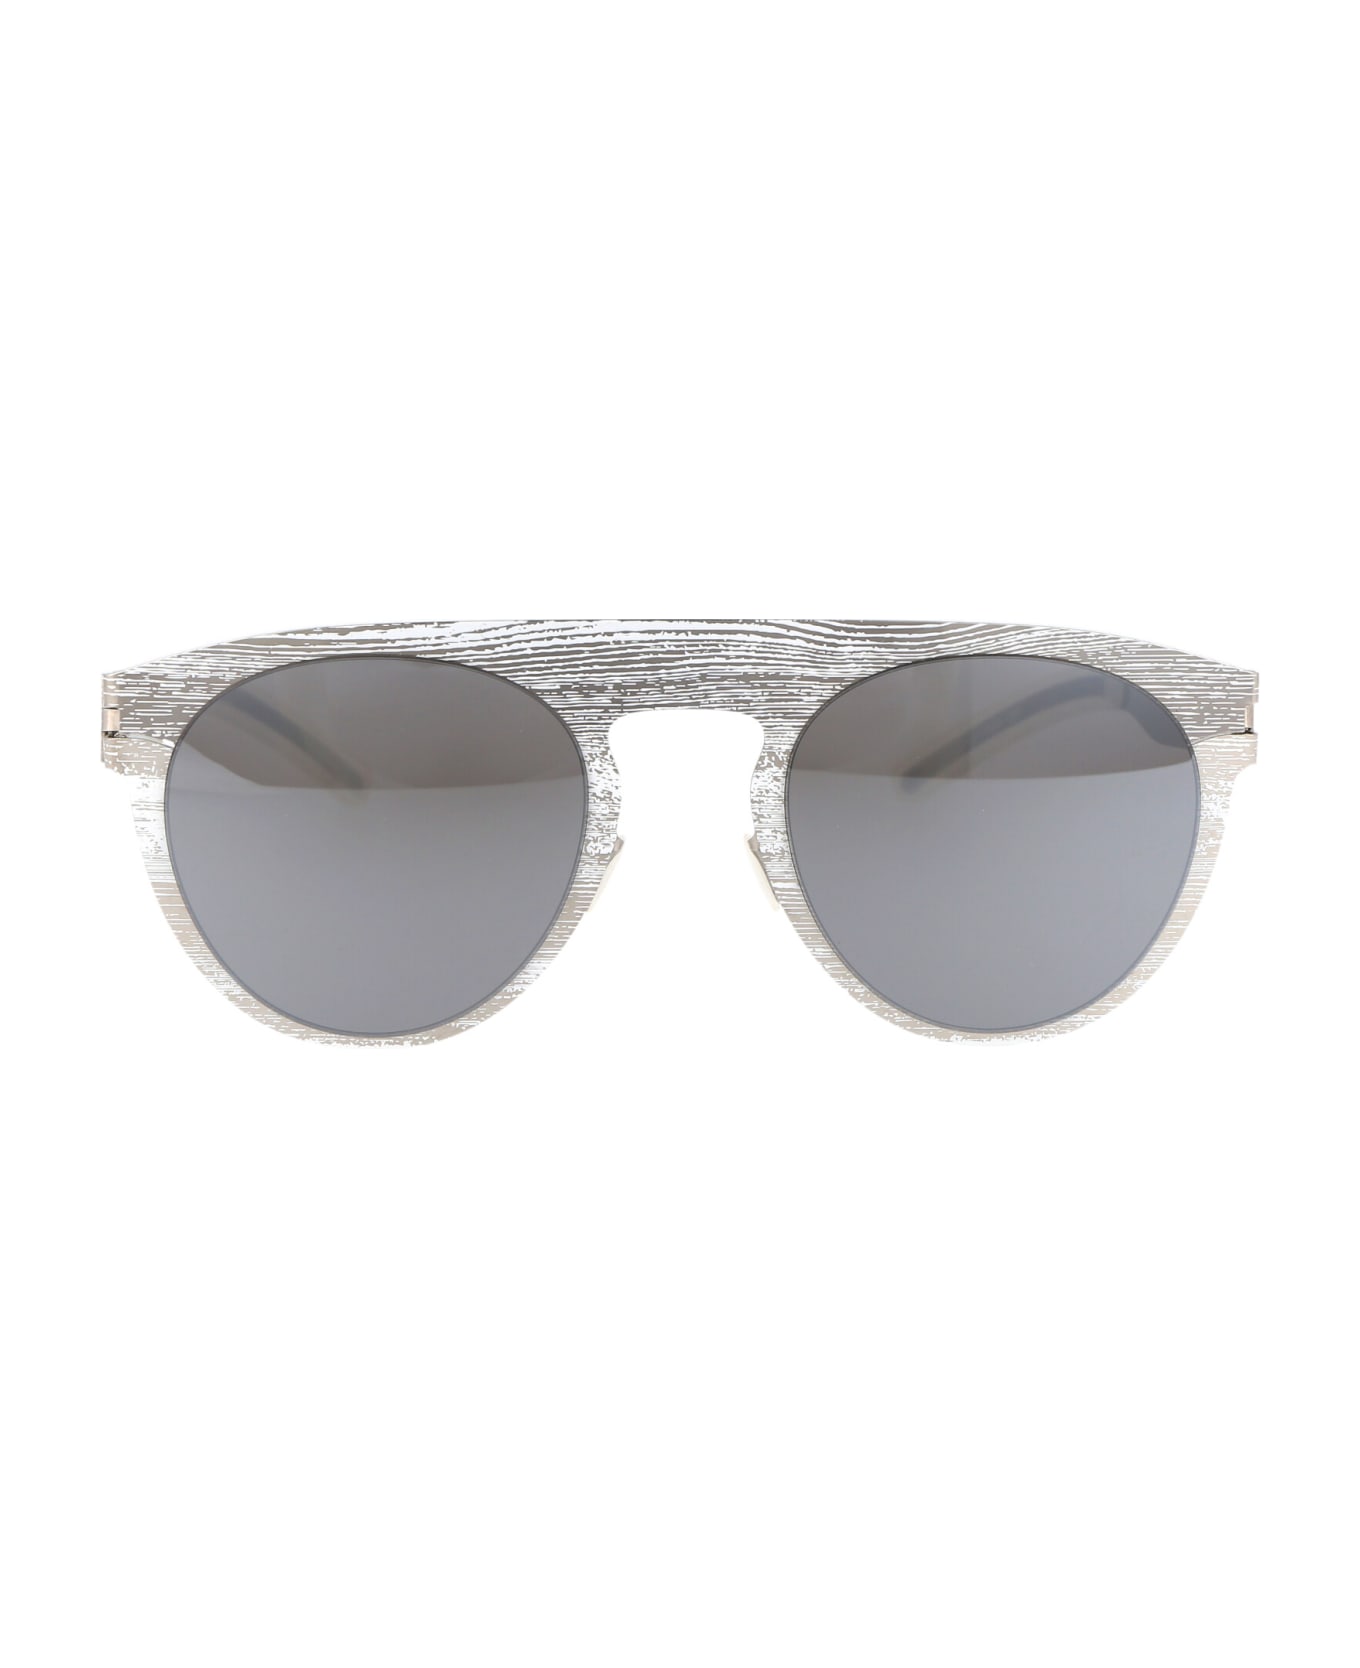 Mykita Mmtransfer004 Sunglasses - 354 Silver White Pine Brown Flash